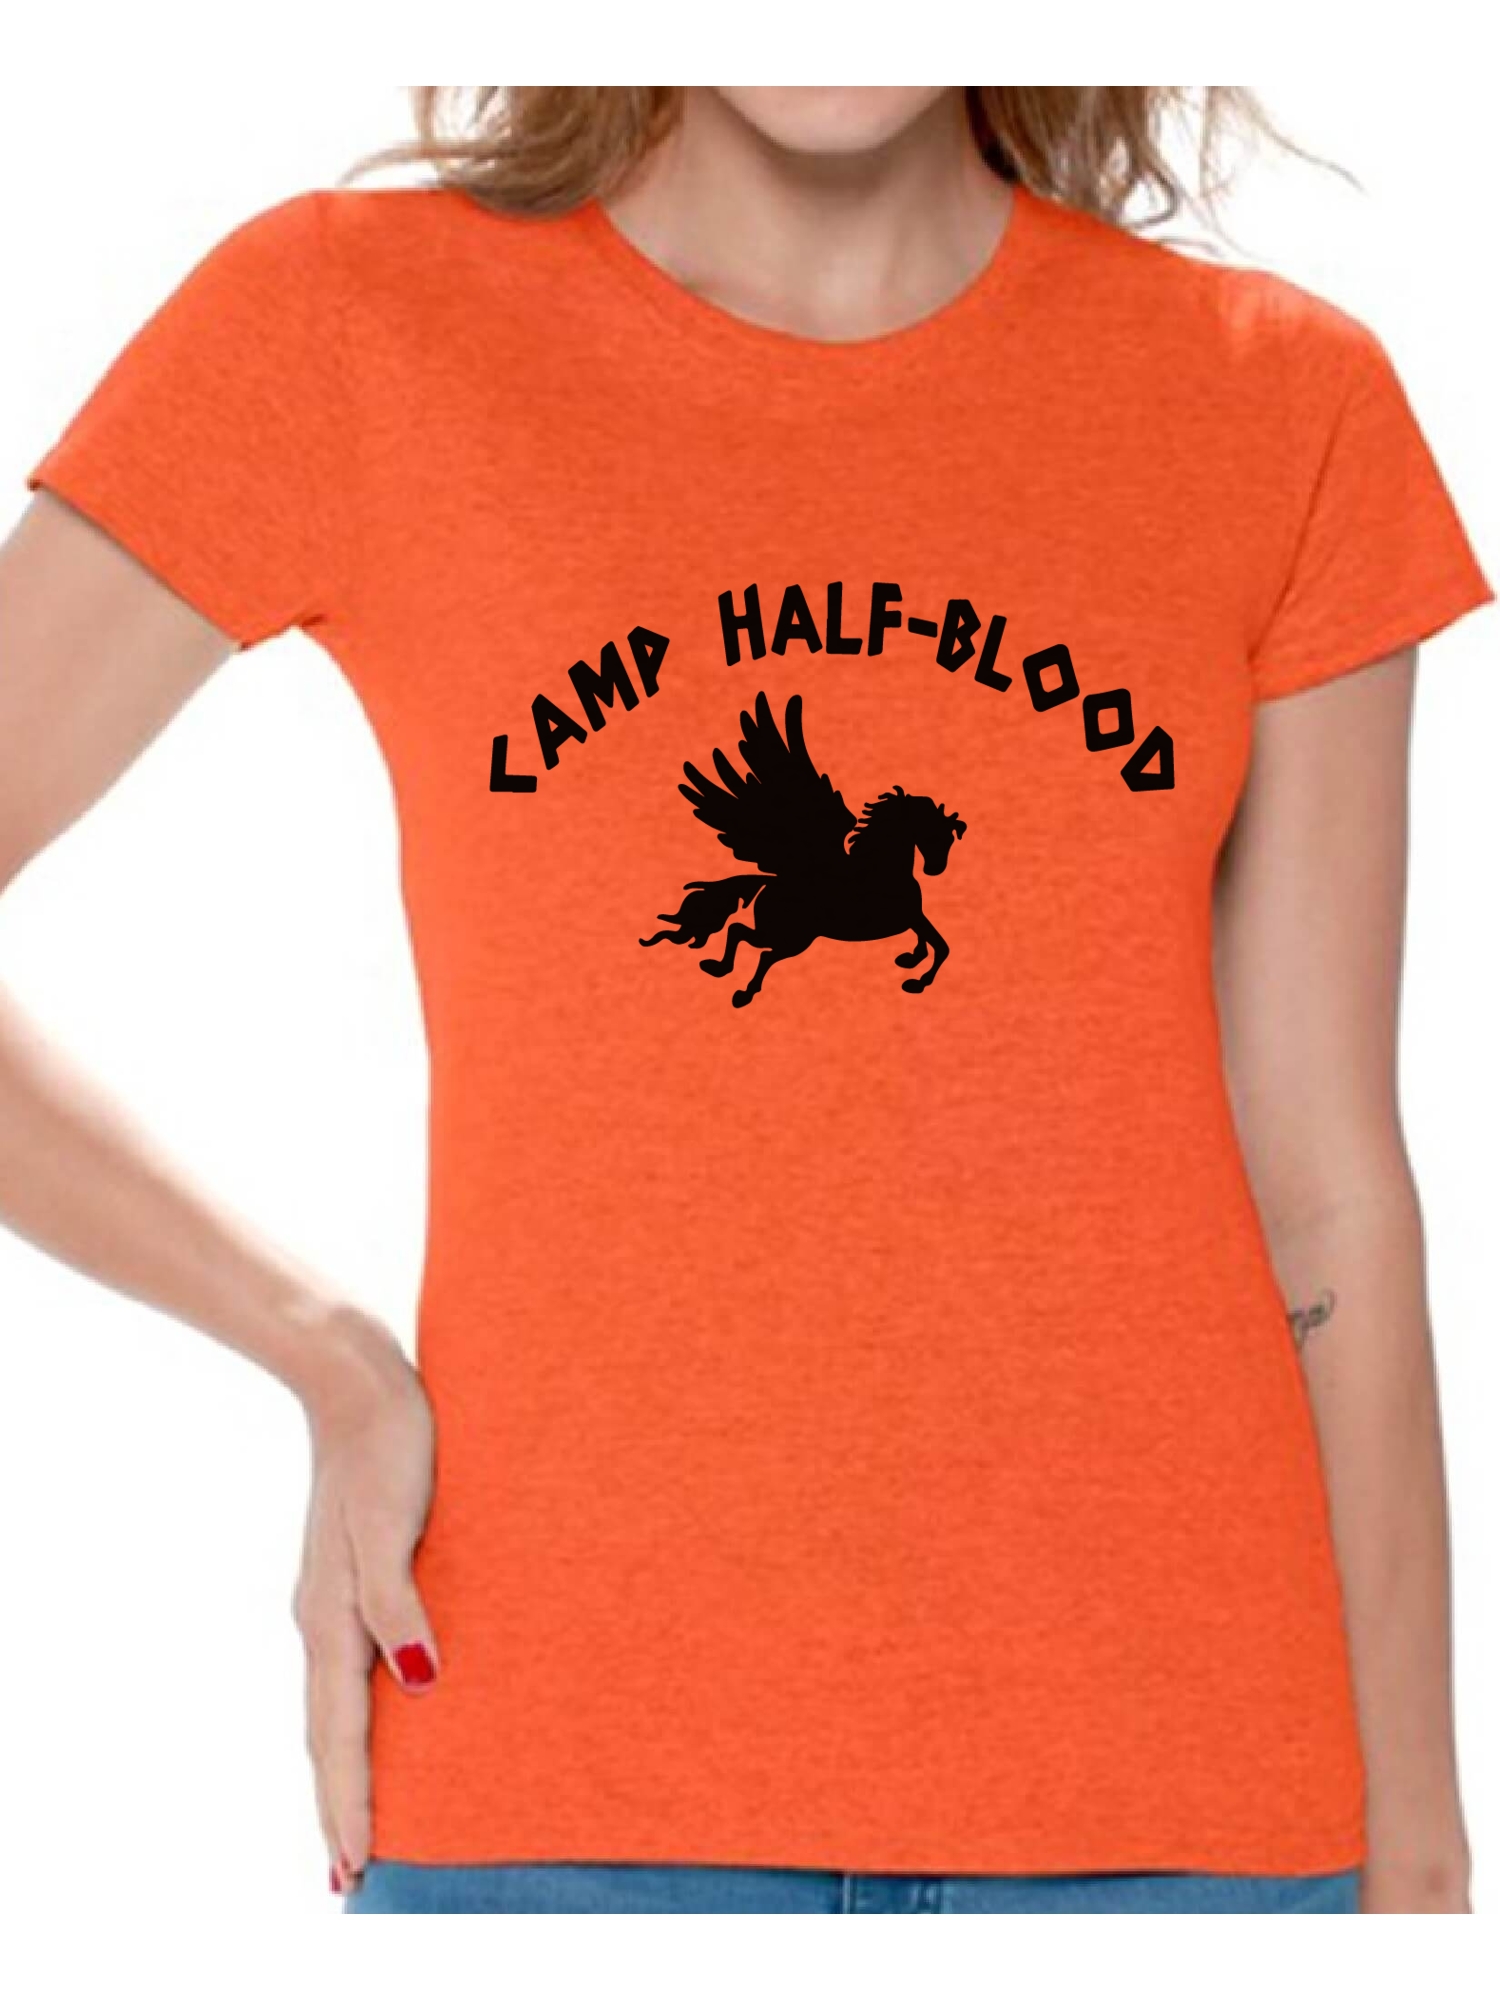 Awkward Styles Mythology Lovers Camp Half-Blood Women T Shirt Camp Half  Blood Shirt for Ladies Geek Tshirt Mystical T Shirt for Ladies Geek T-Shirt